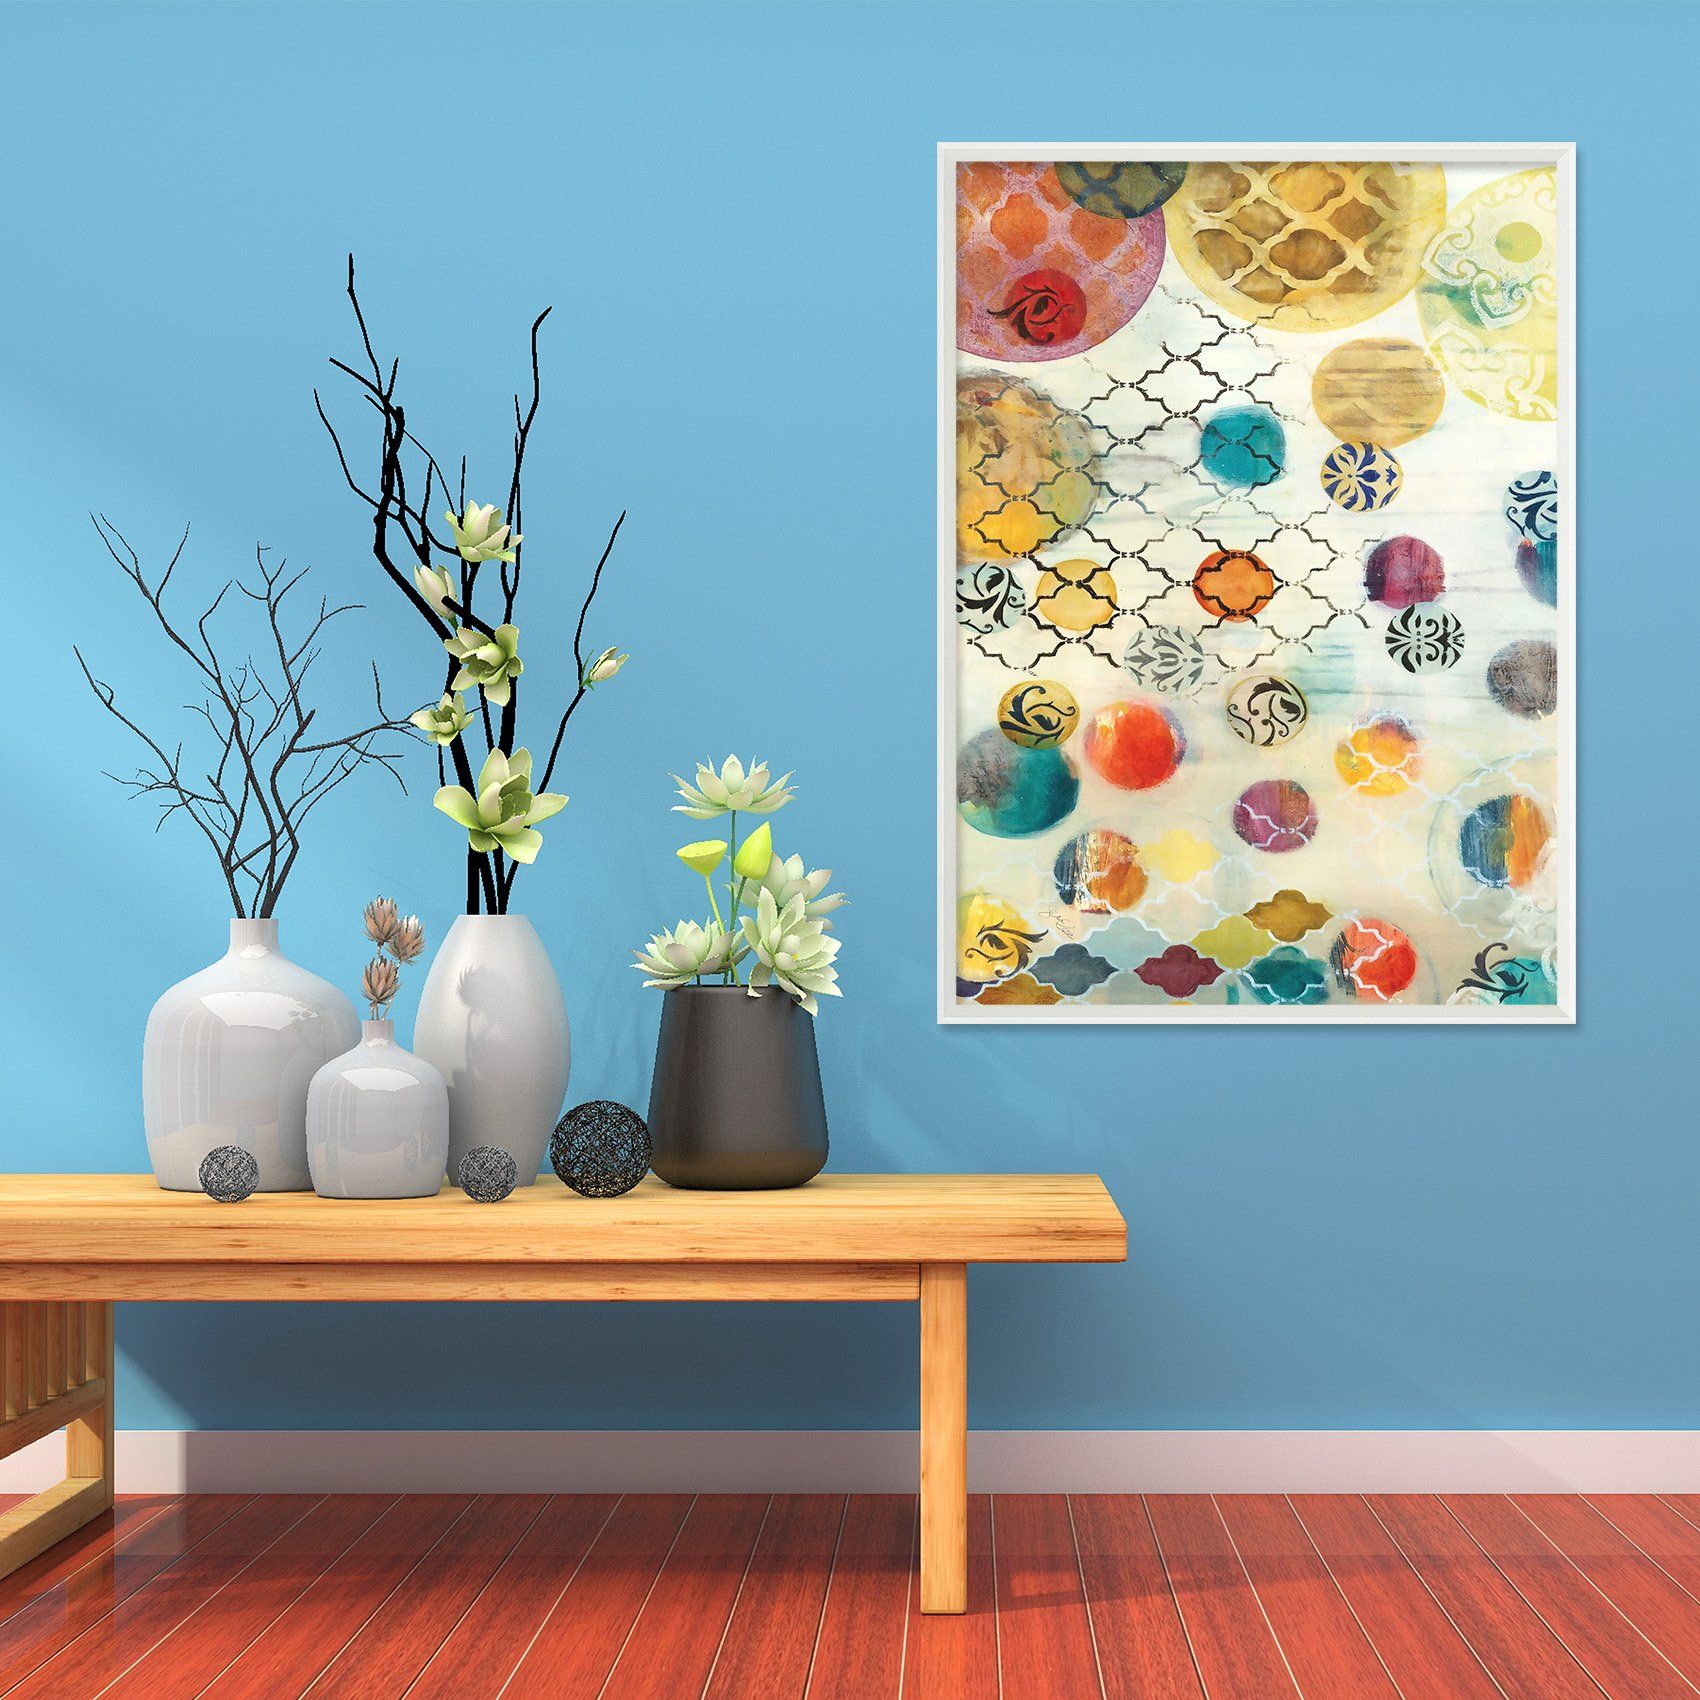 3D Colorful Balls 115 Fake Framed Print Painting Wallpaper AJ Creativity Home 